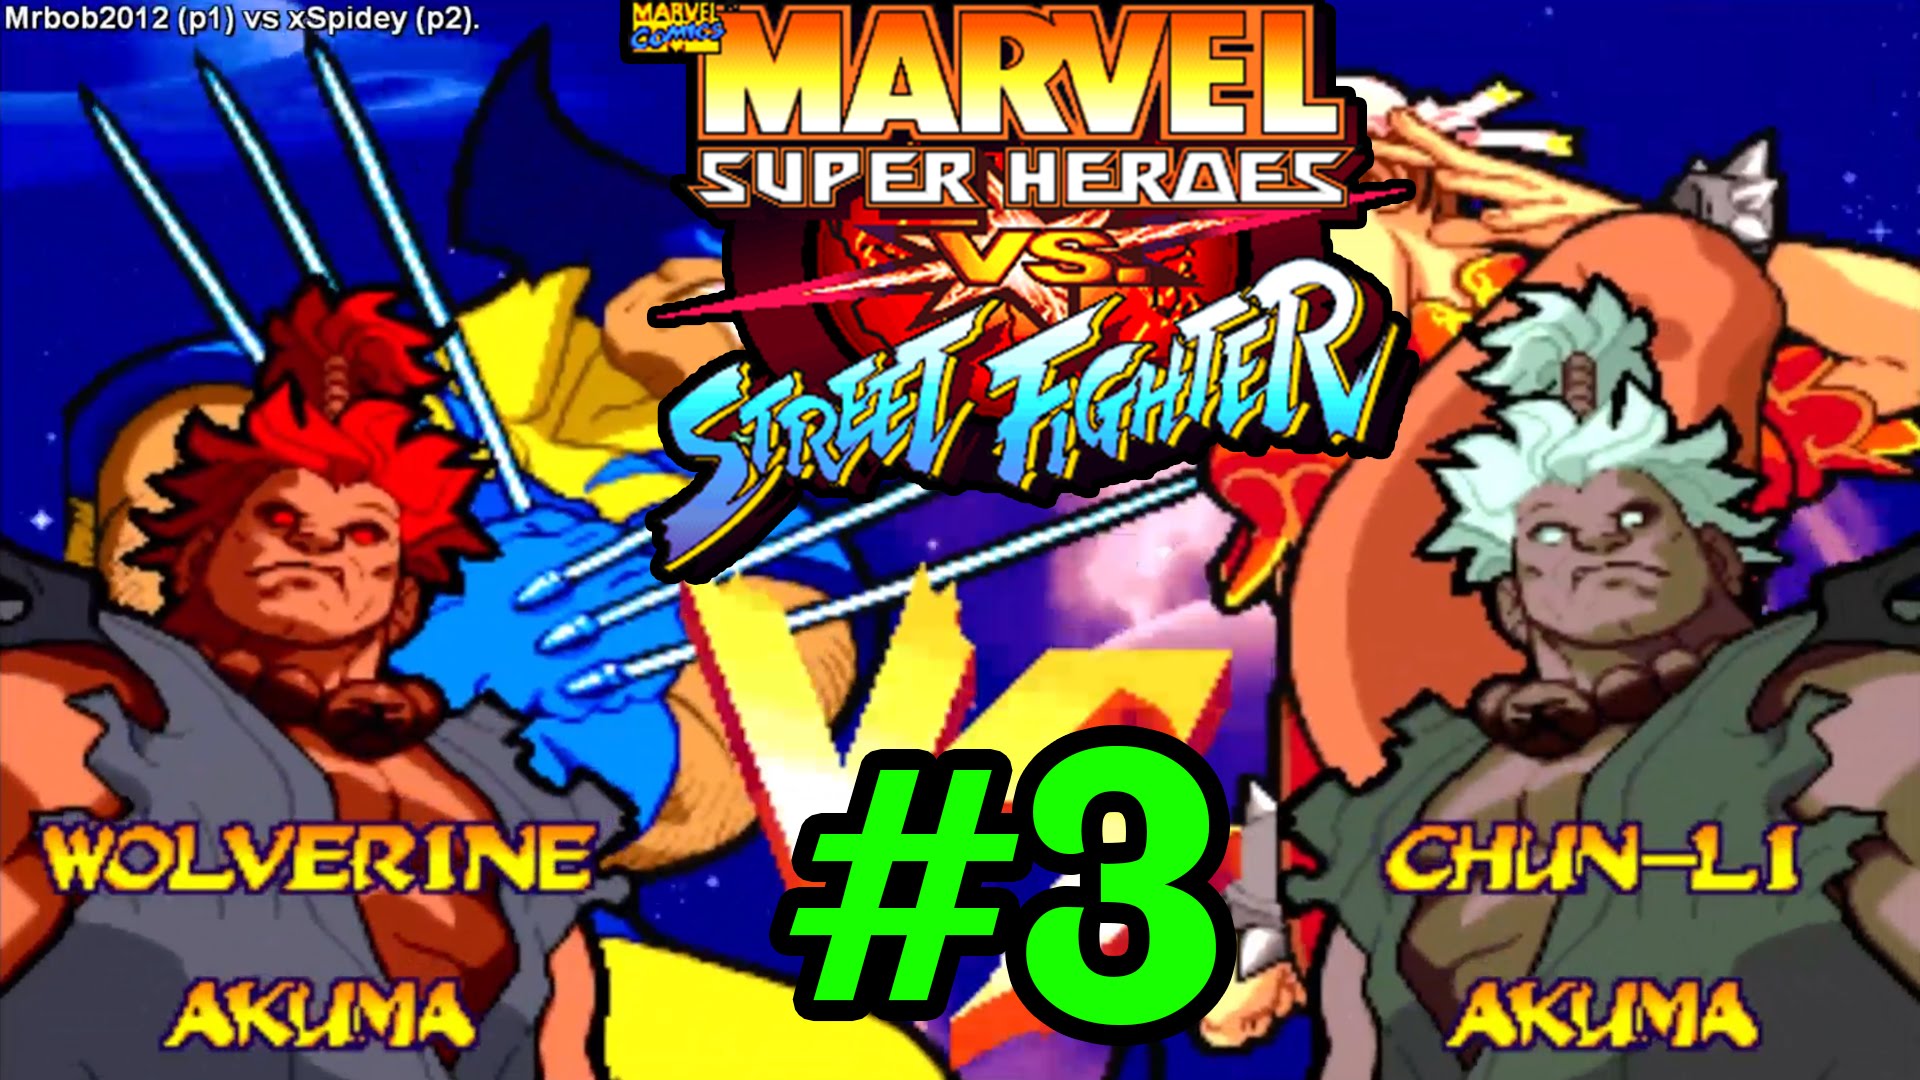 HQ Marvel Super Heroes Vs. Street Fighter Wallpapers | File 315.98Kb